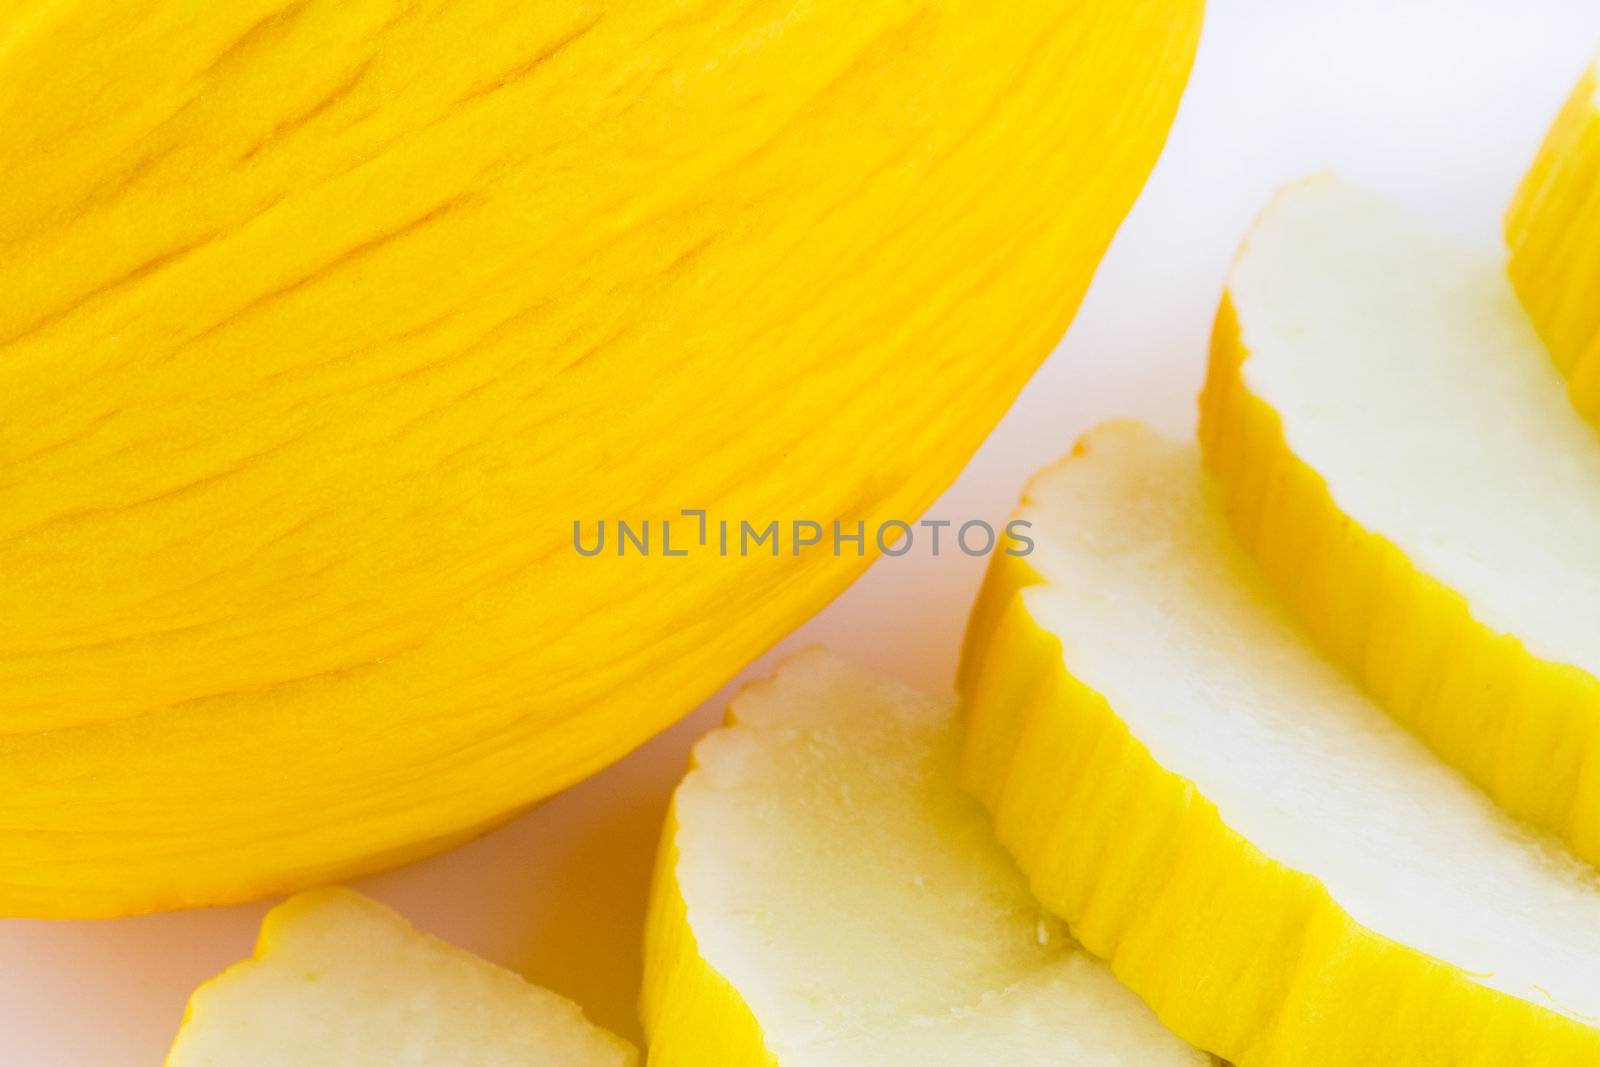 Yellow melon slices on white background, sweet fruit